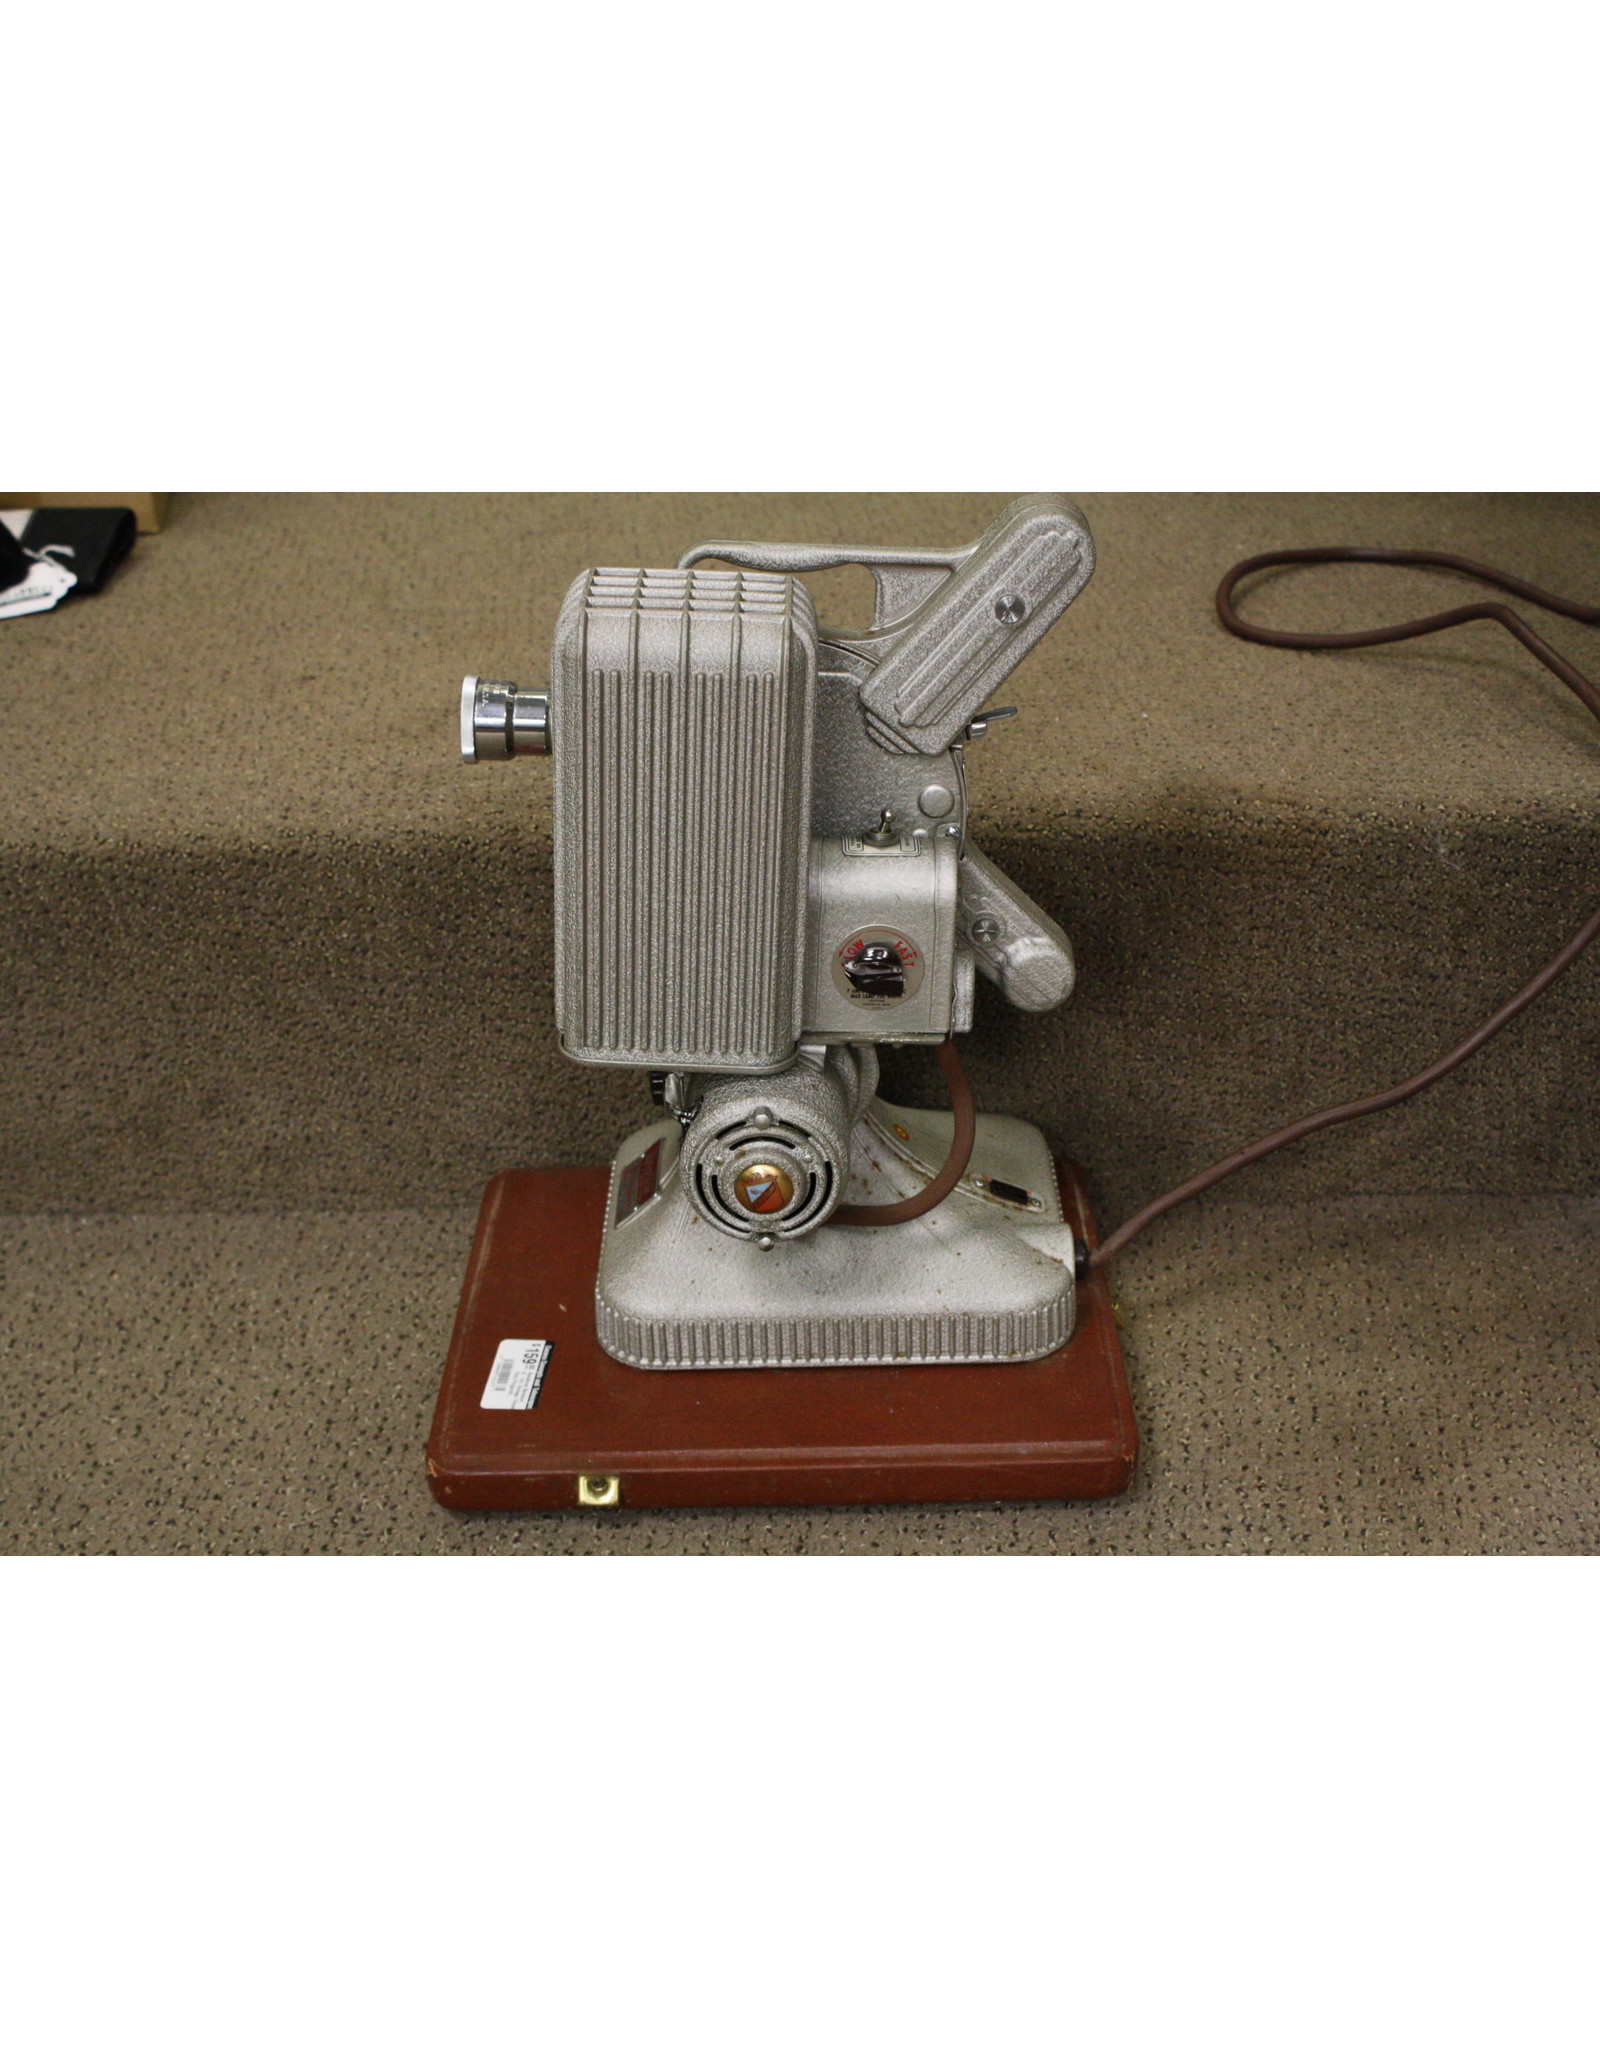 Keystone Belmont K-161 Vintage 16mm Film Projector Tested Working